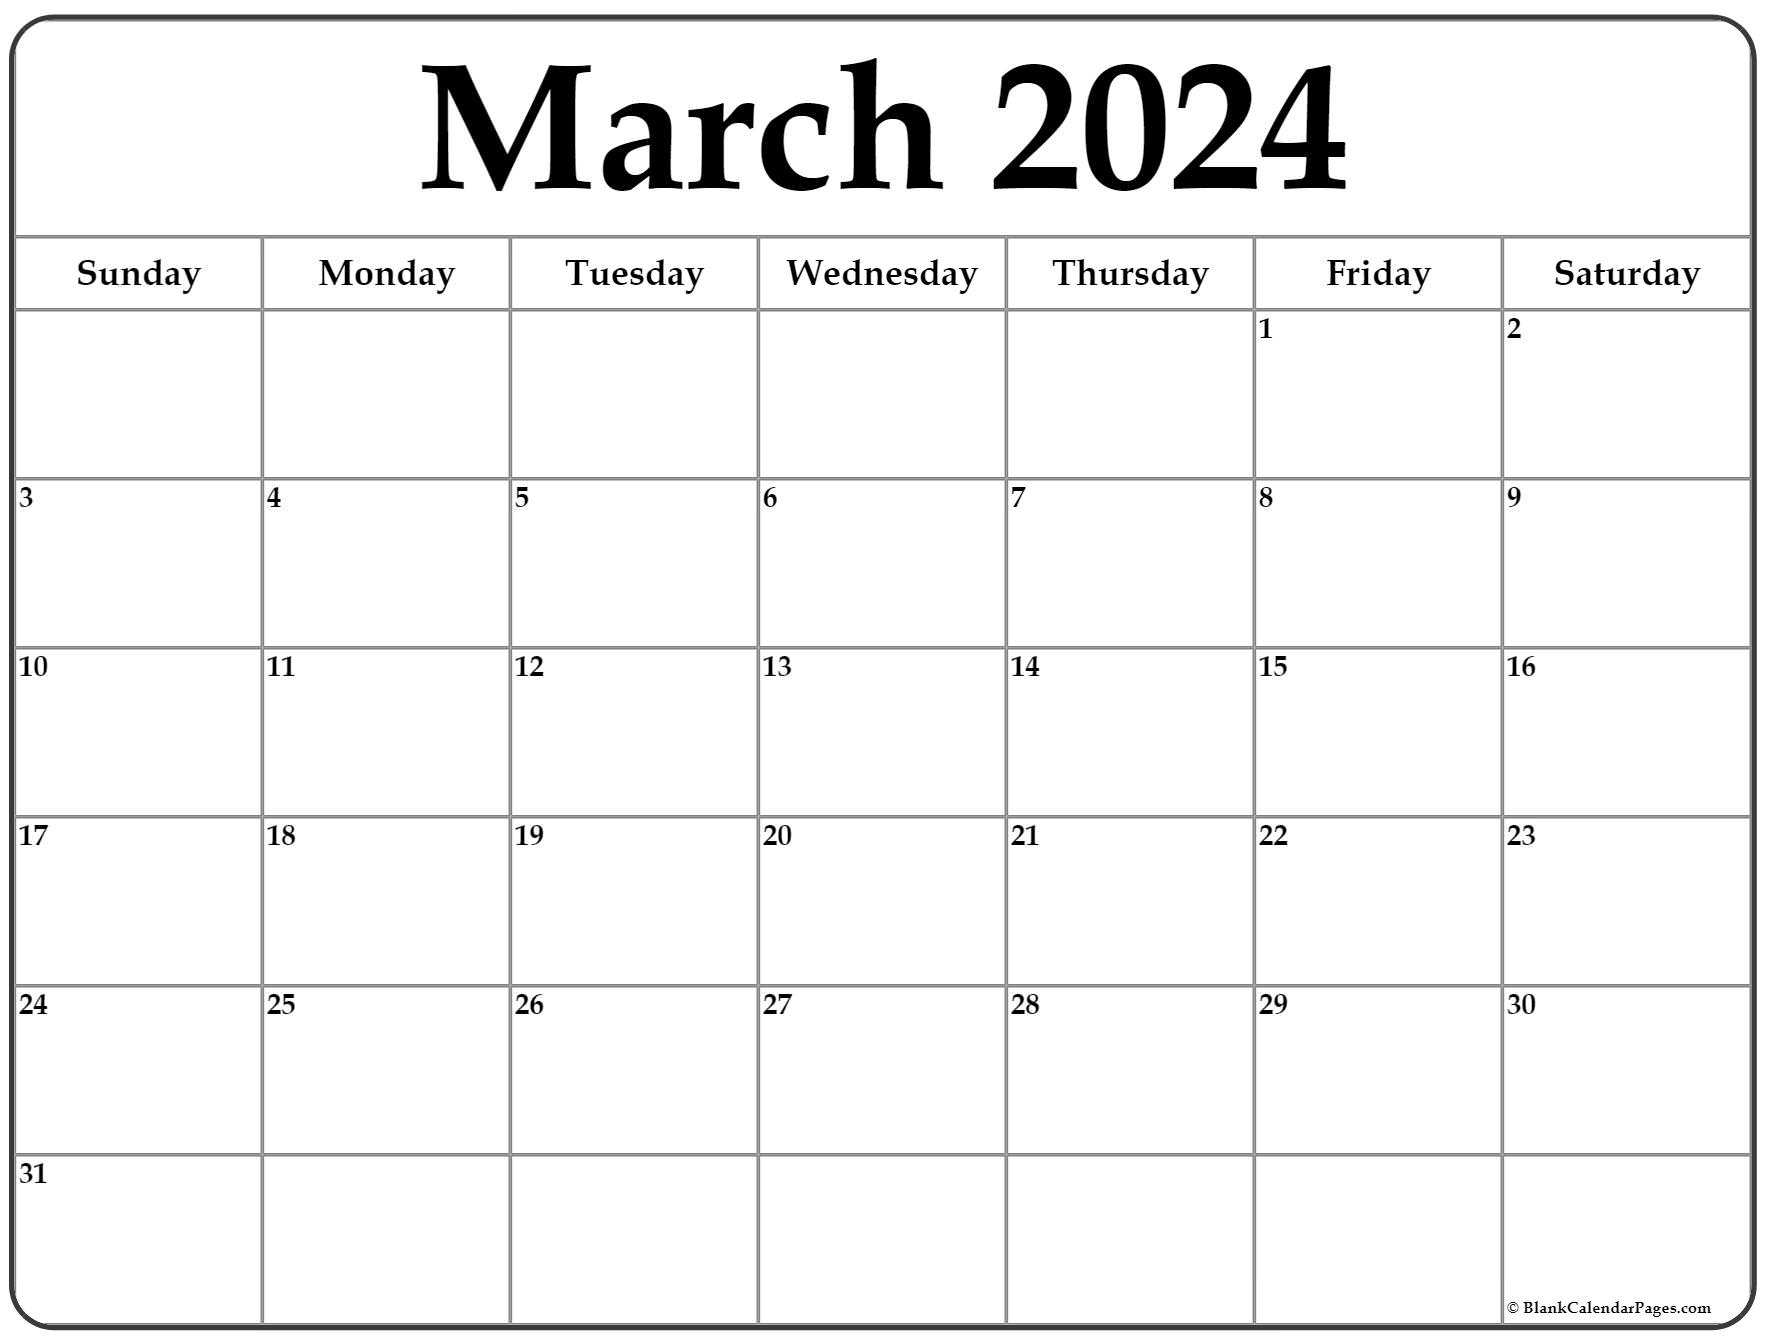 March 2024 Calendar | Free Printable Calendar throughout Free Printable Blank Calendar March 2024